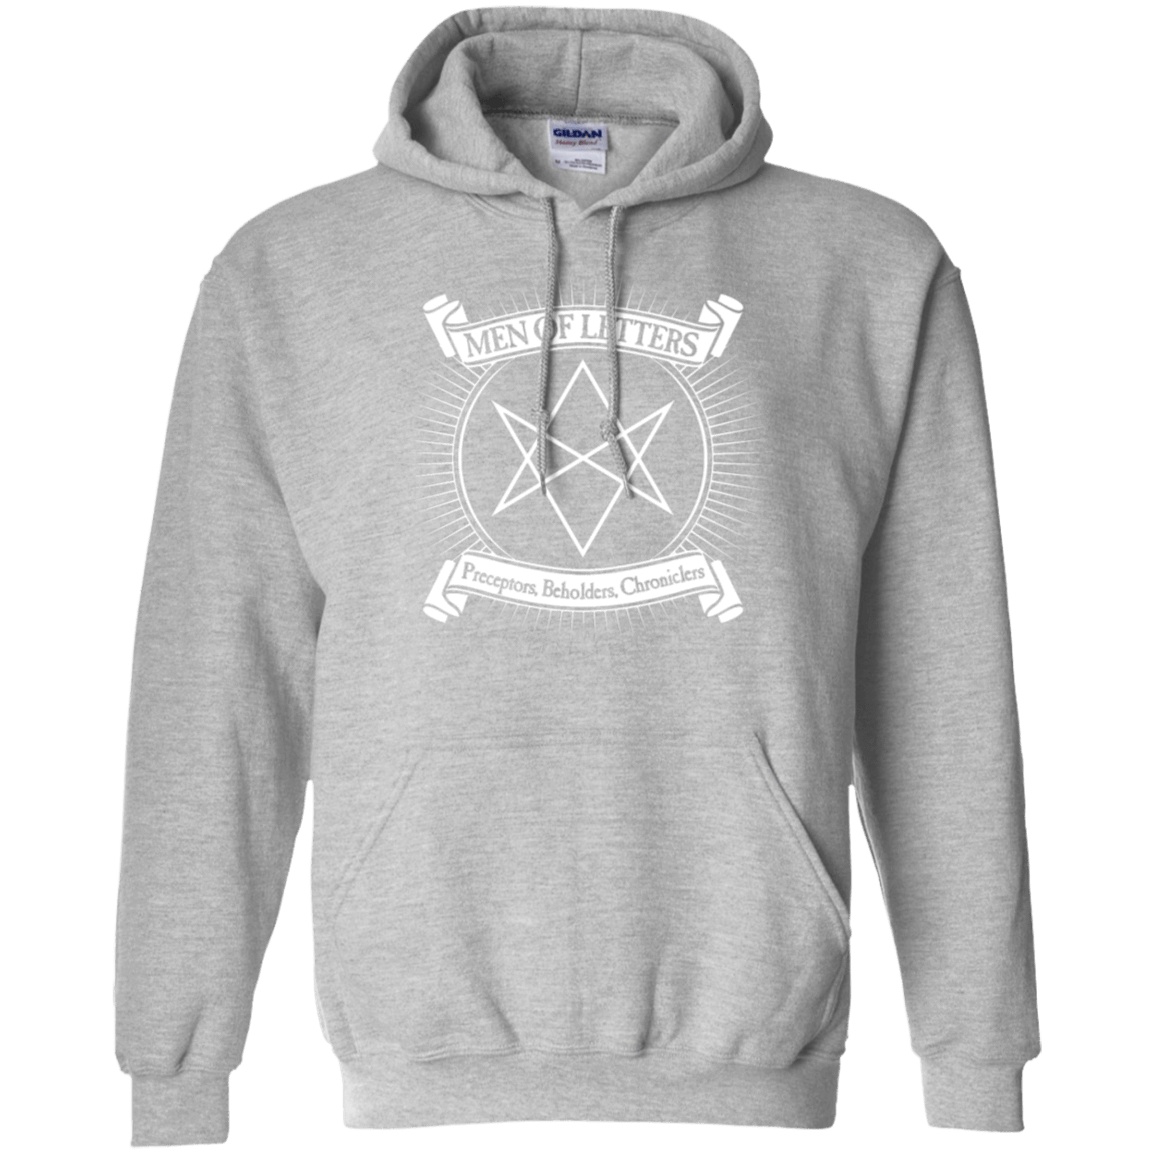 Sweatshirts Sport Grey / S Men of Letters Pullover Hoodie